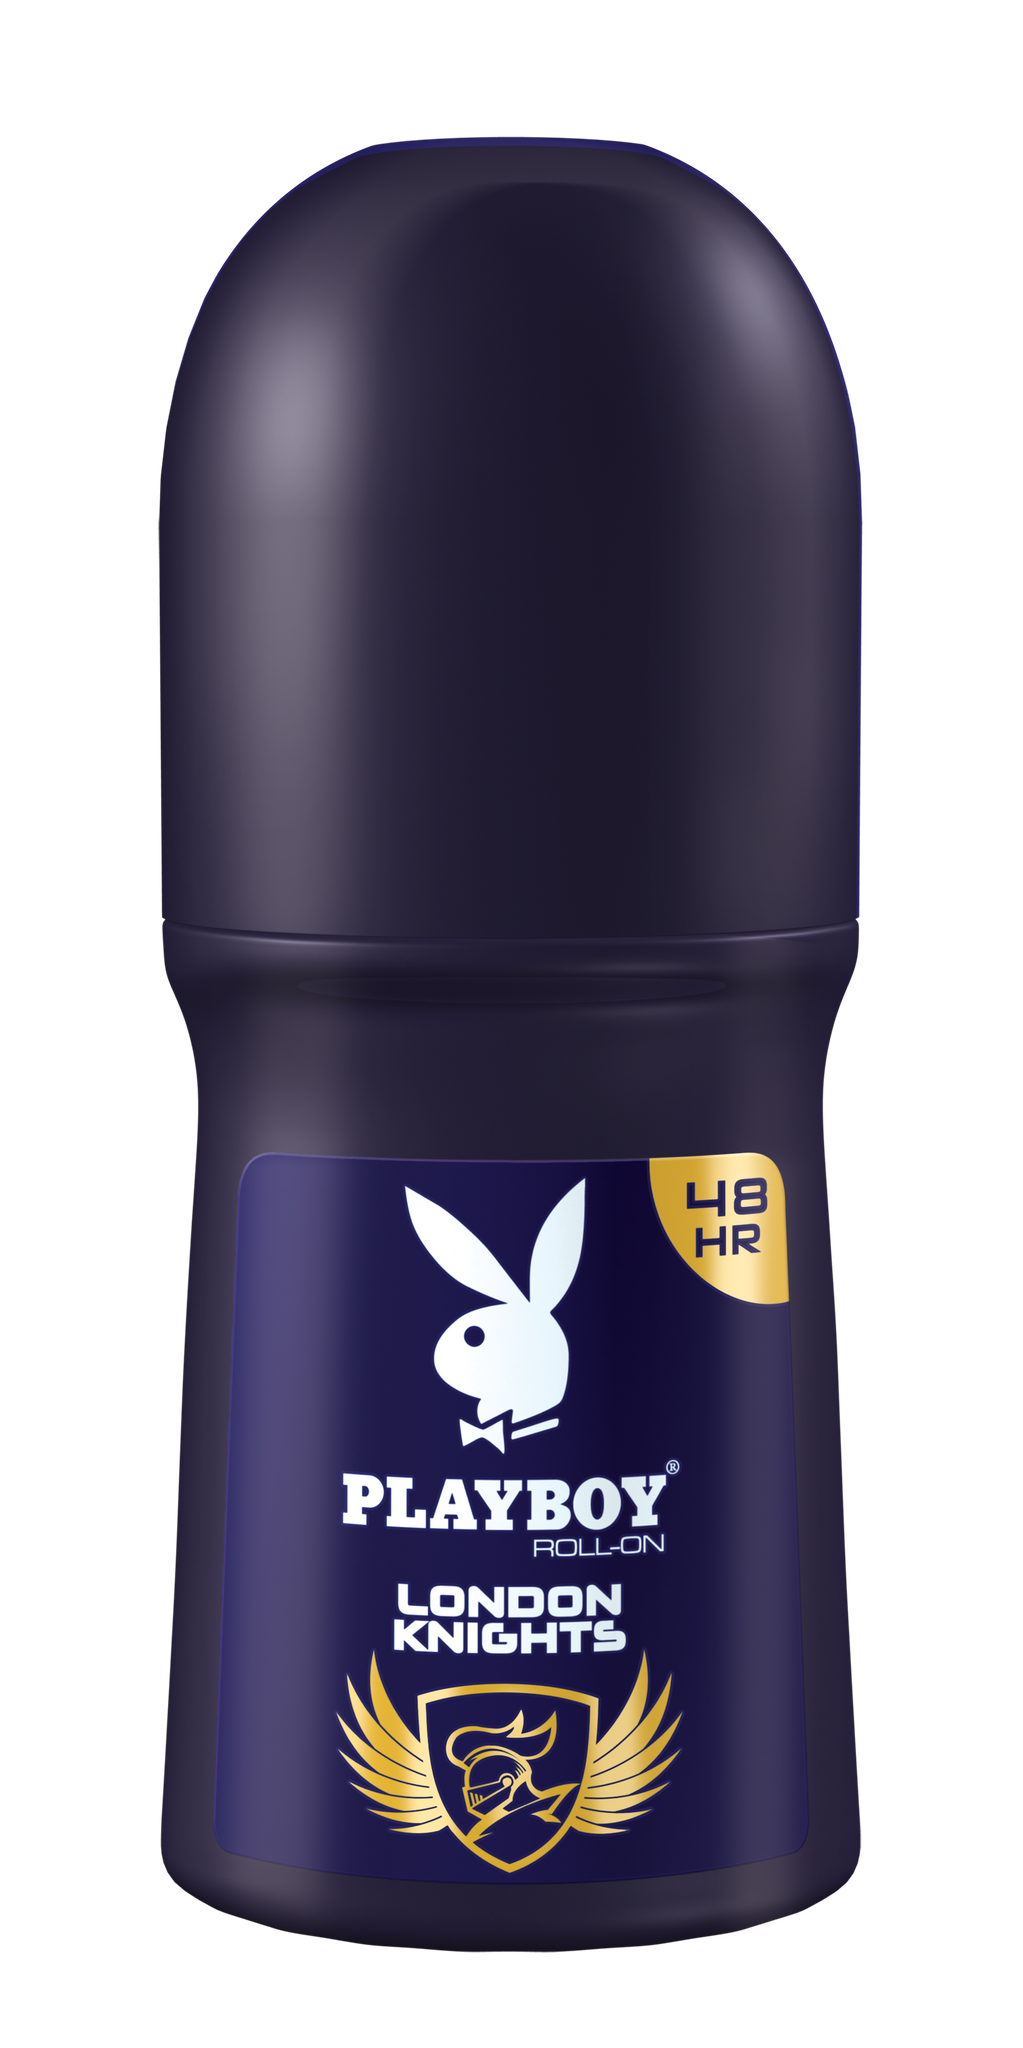 Playboy London Knights - Roll On - 50ml